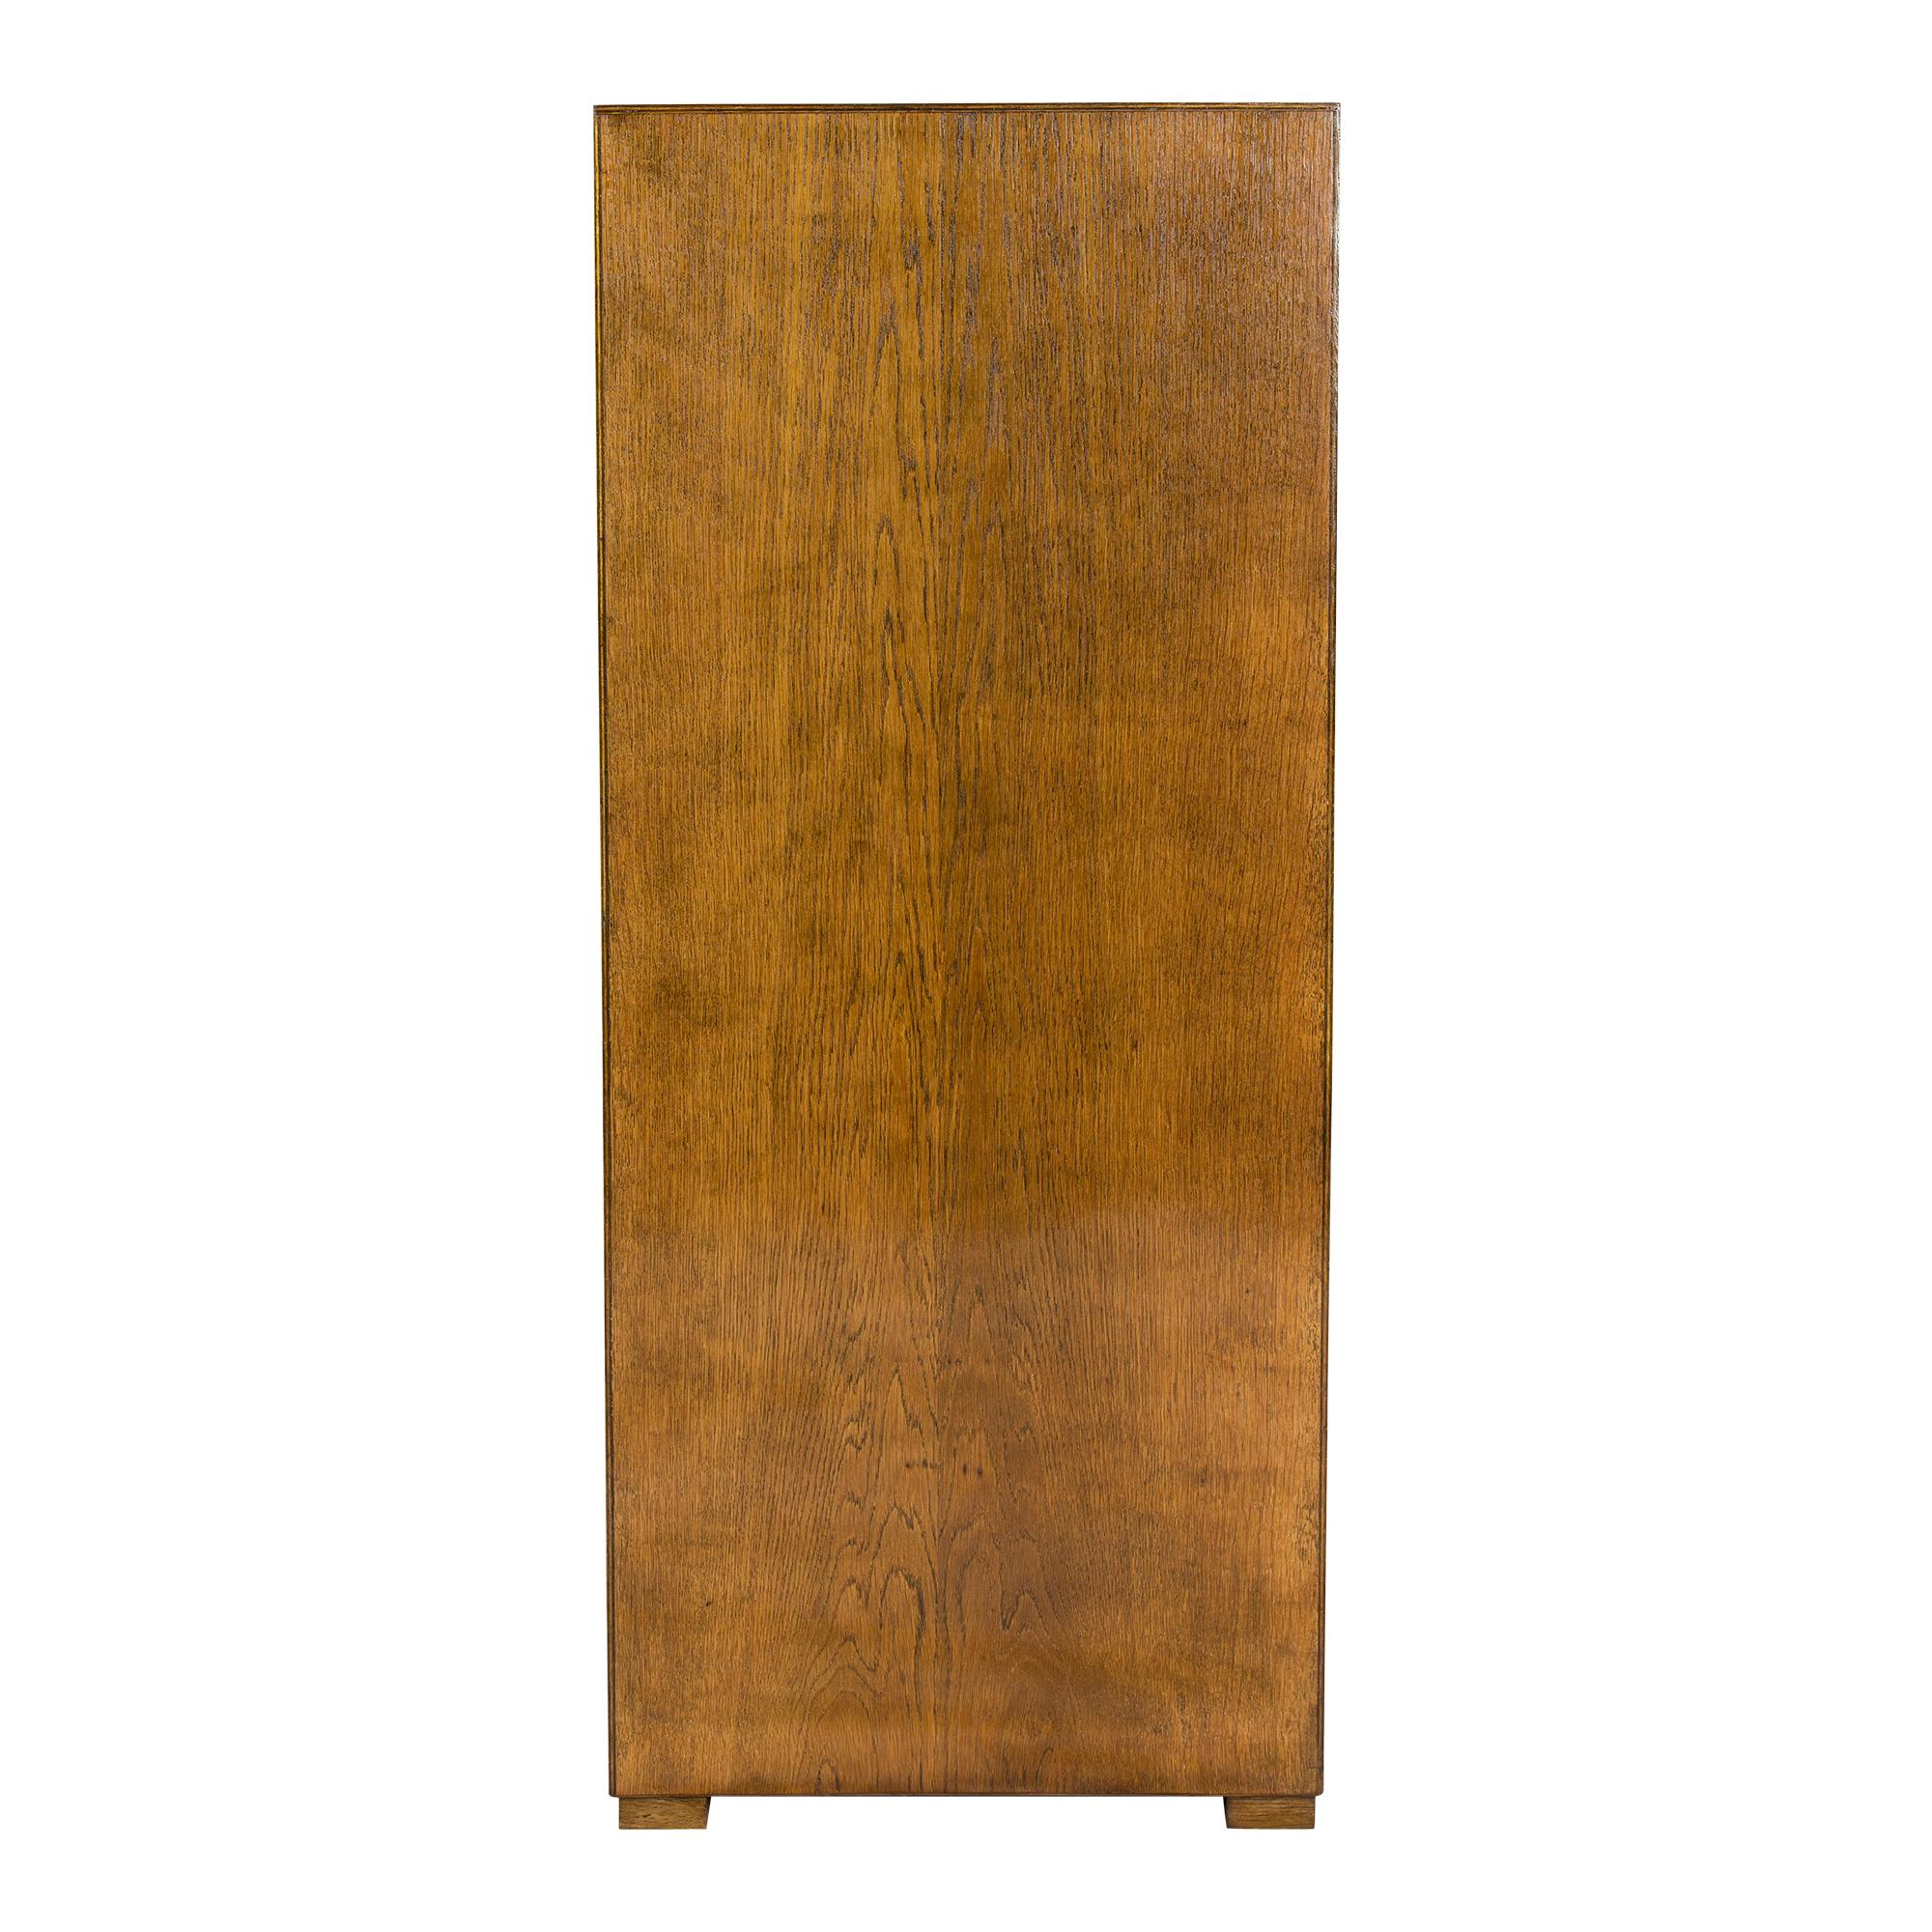 Polished Early 20th Century Art Deco / Bauhaus Oak Wood Roller Door Filling Cabinet